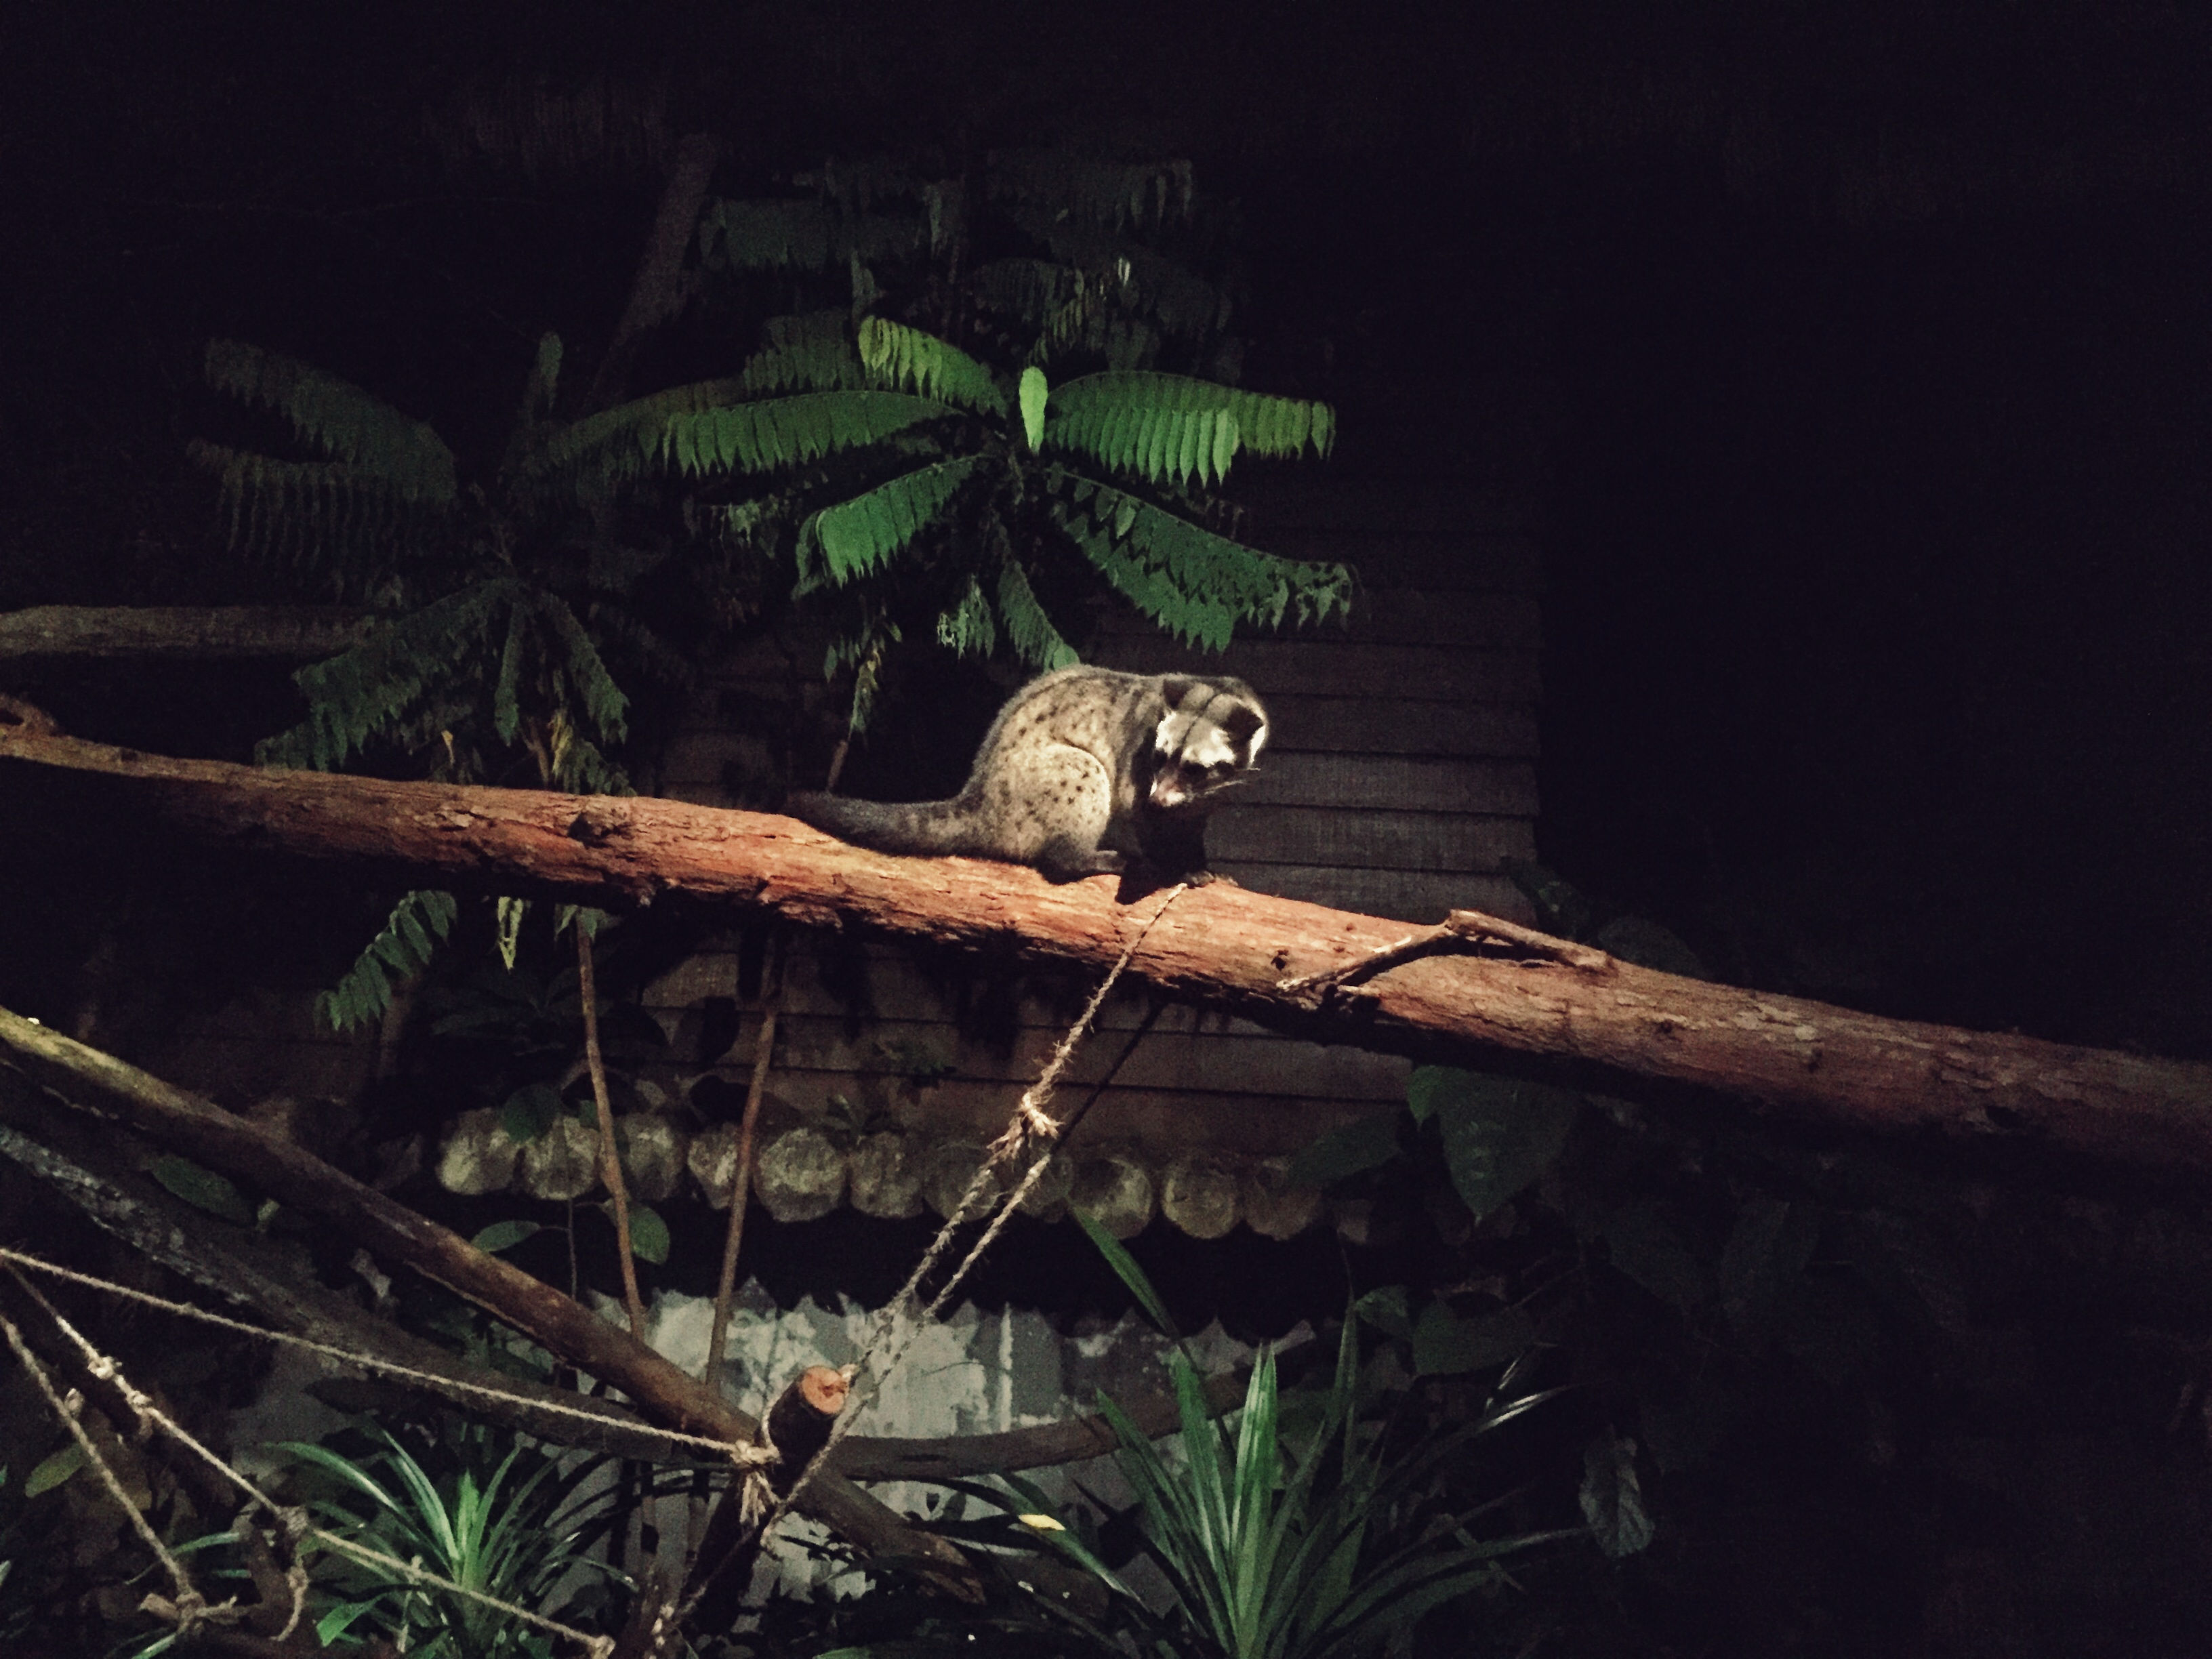 An endangered palm civet is seen in its natural habitat during Singapore Night Safari at Singapore Zoo.